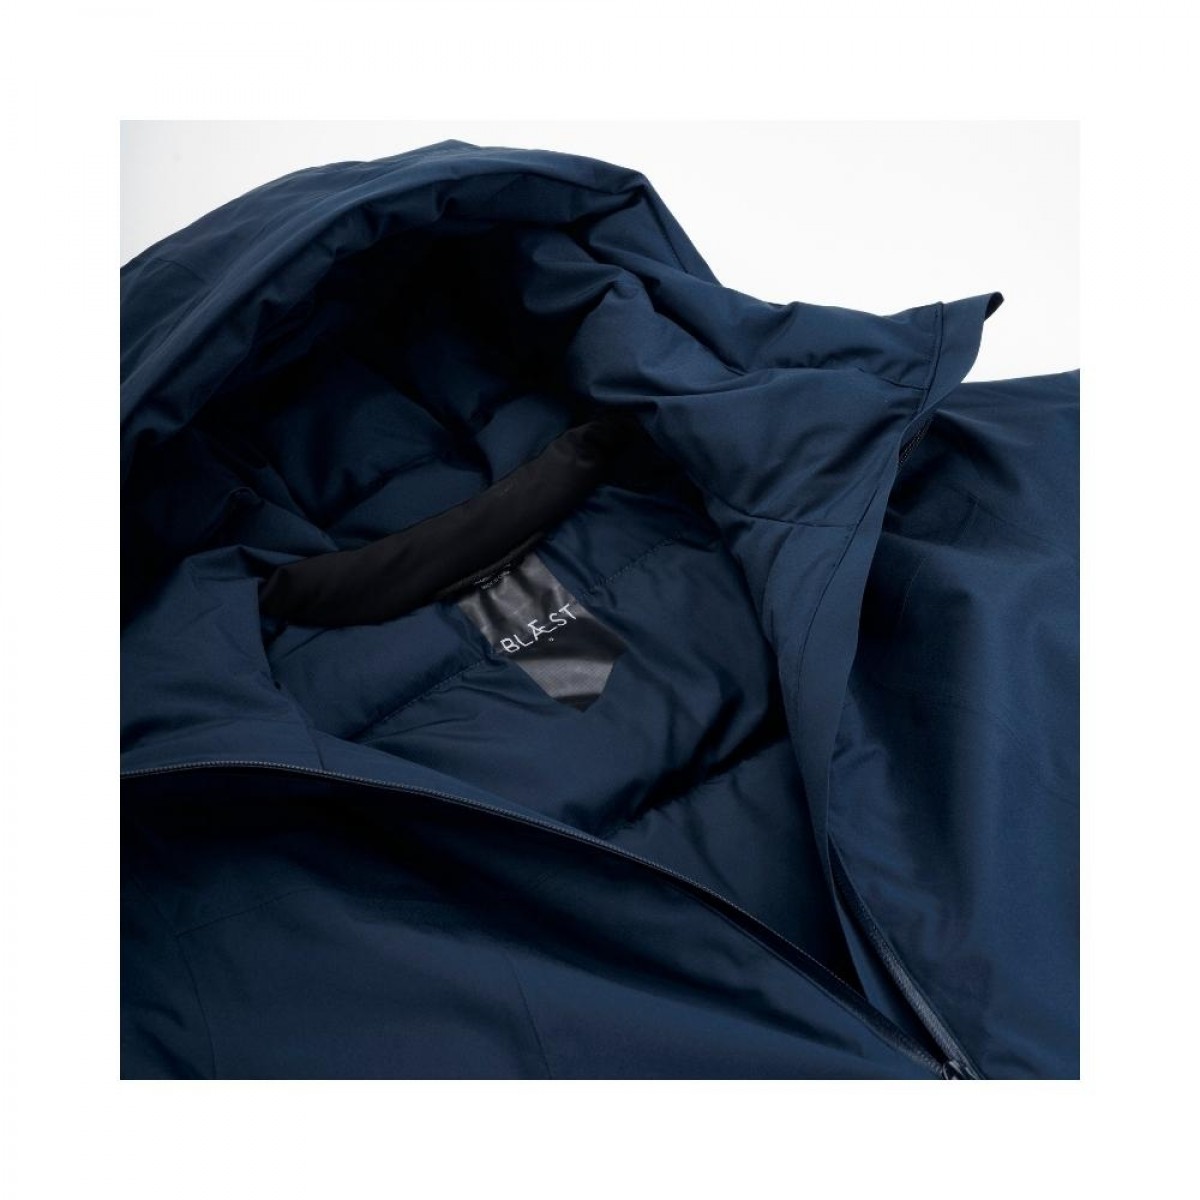 bjorli jacket - dark navy - zip detalje